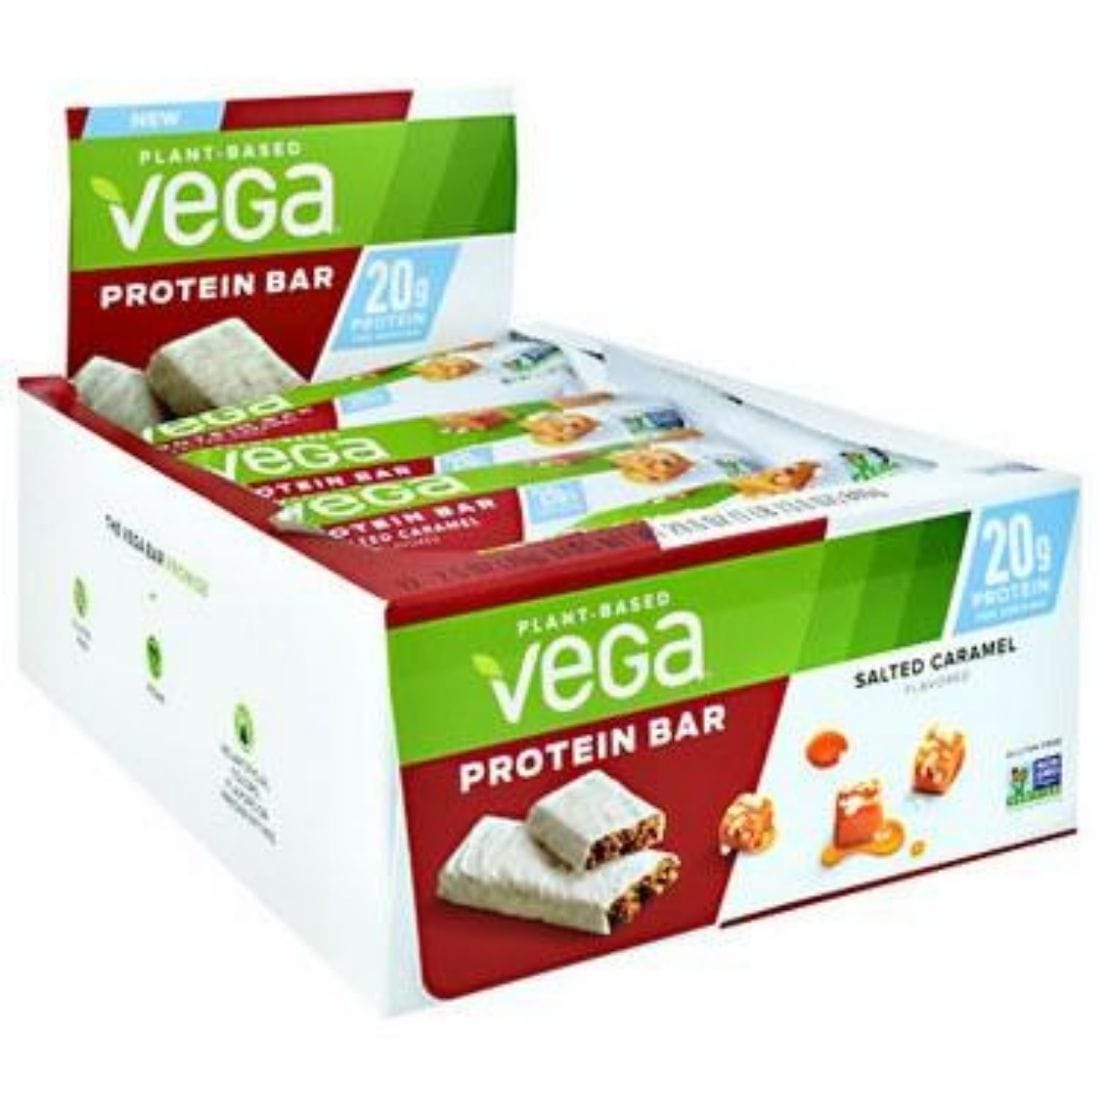 Vega Protein Bar (Plant Based)